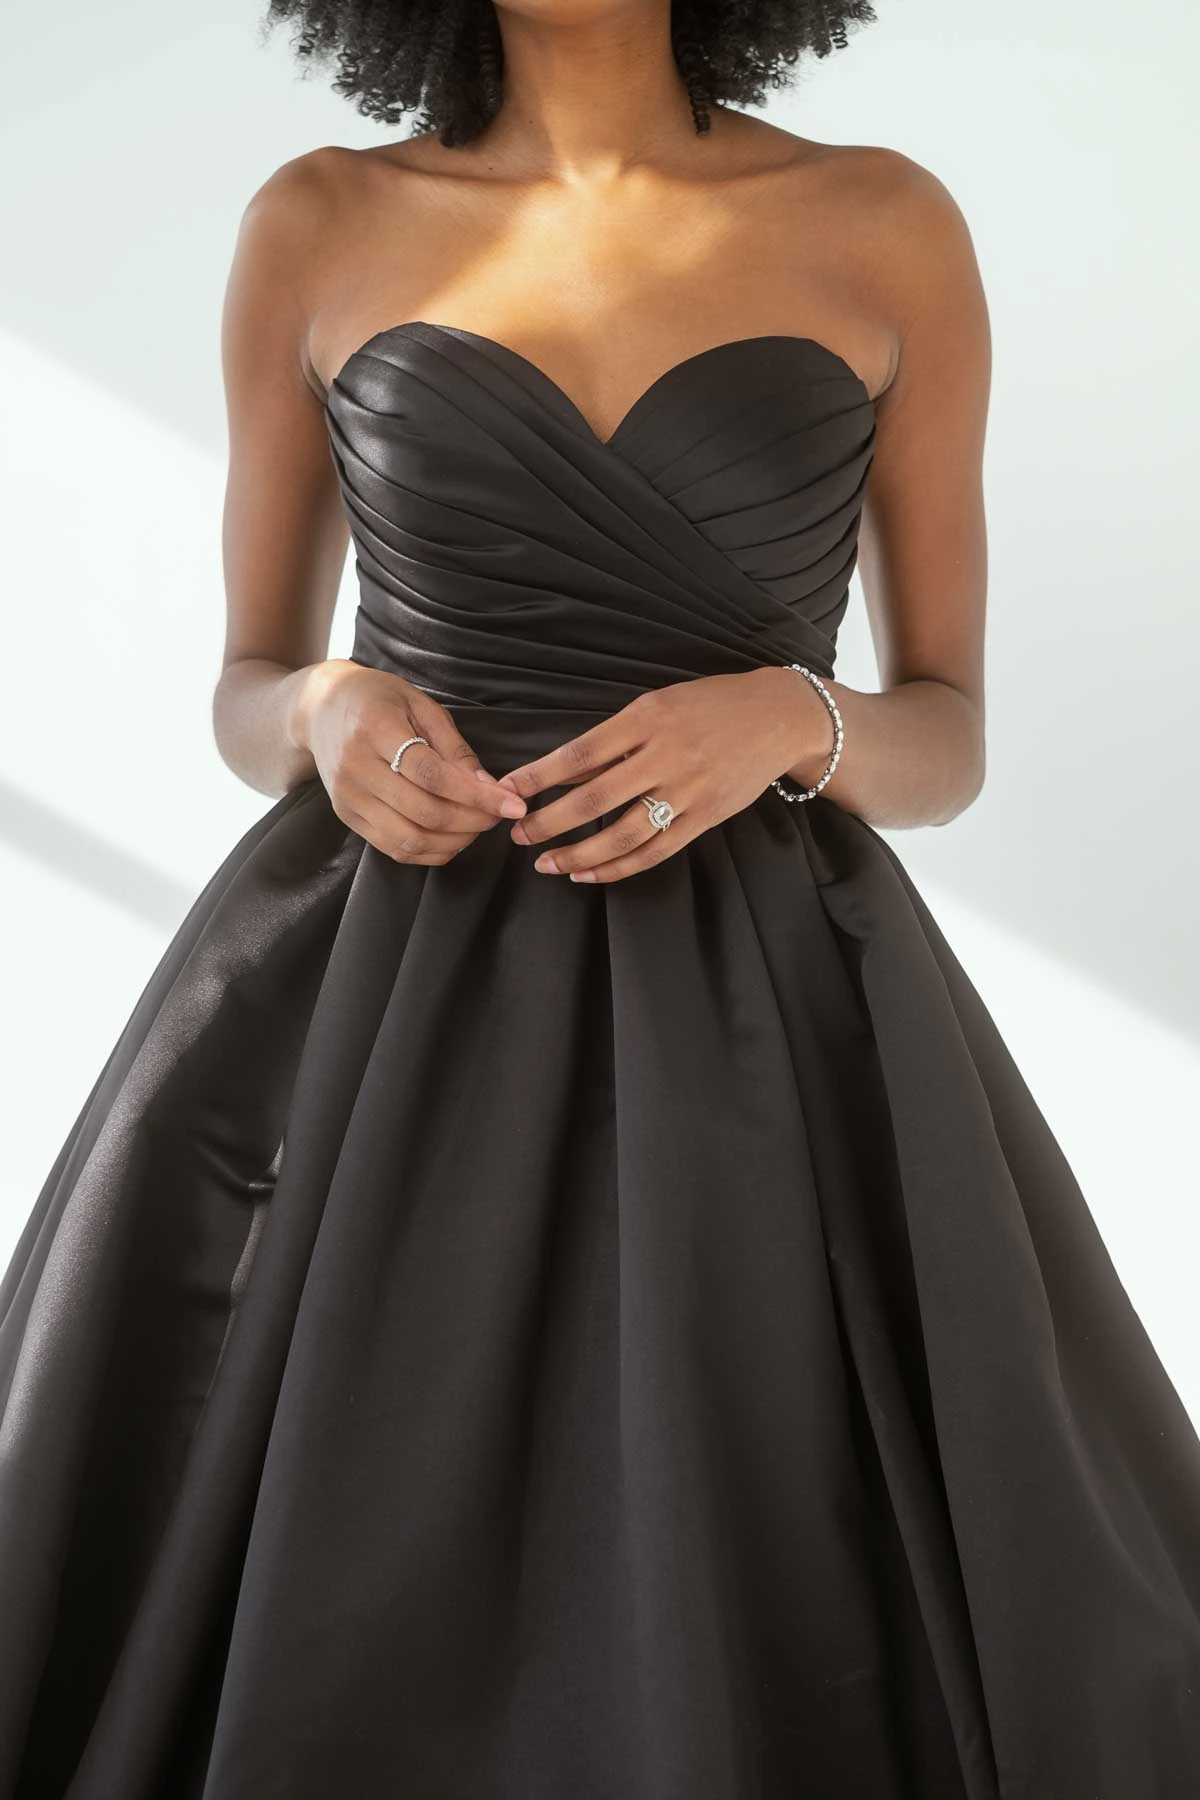 black strapless ballgown wedding dress with ruched bodice - D3753 by Essense of Australia